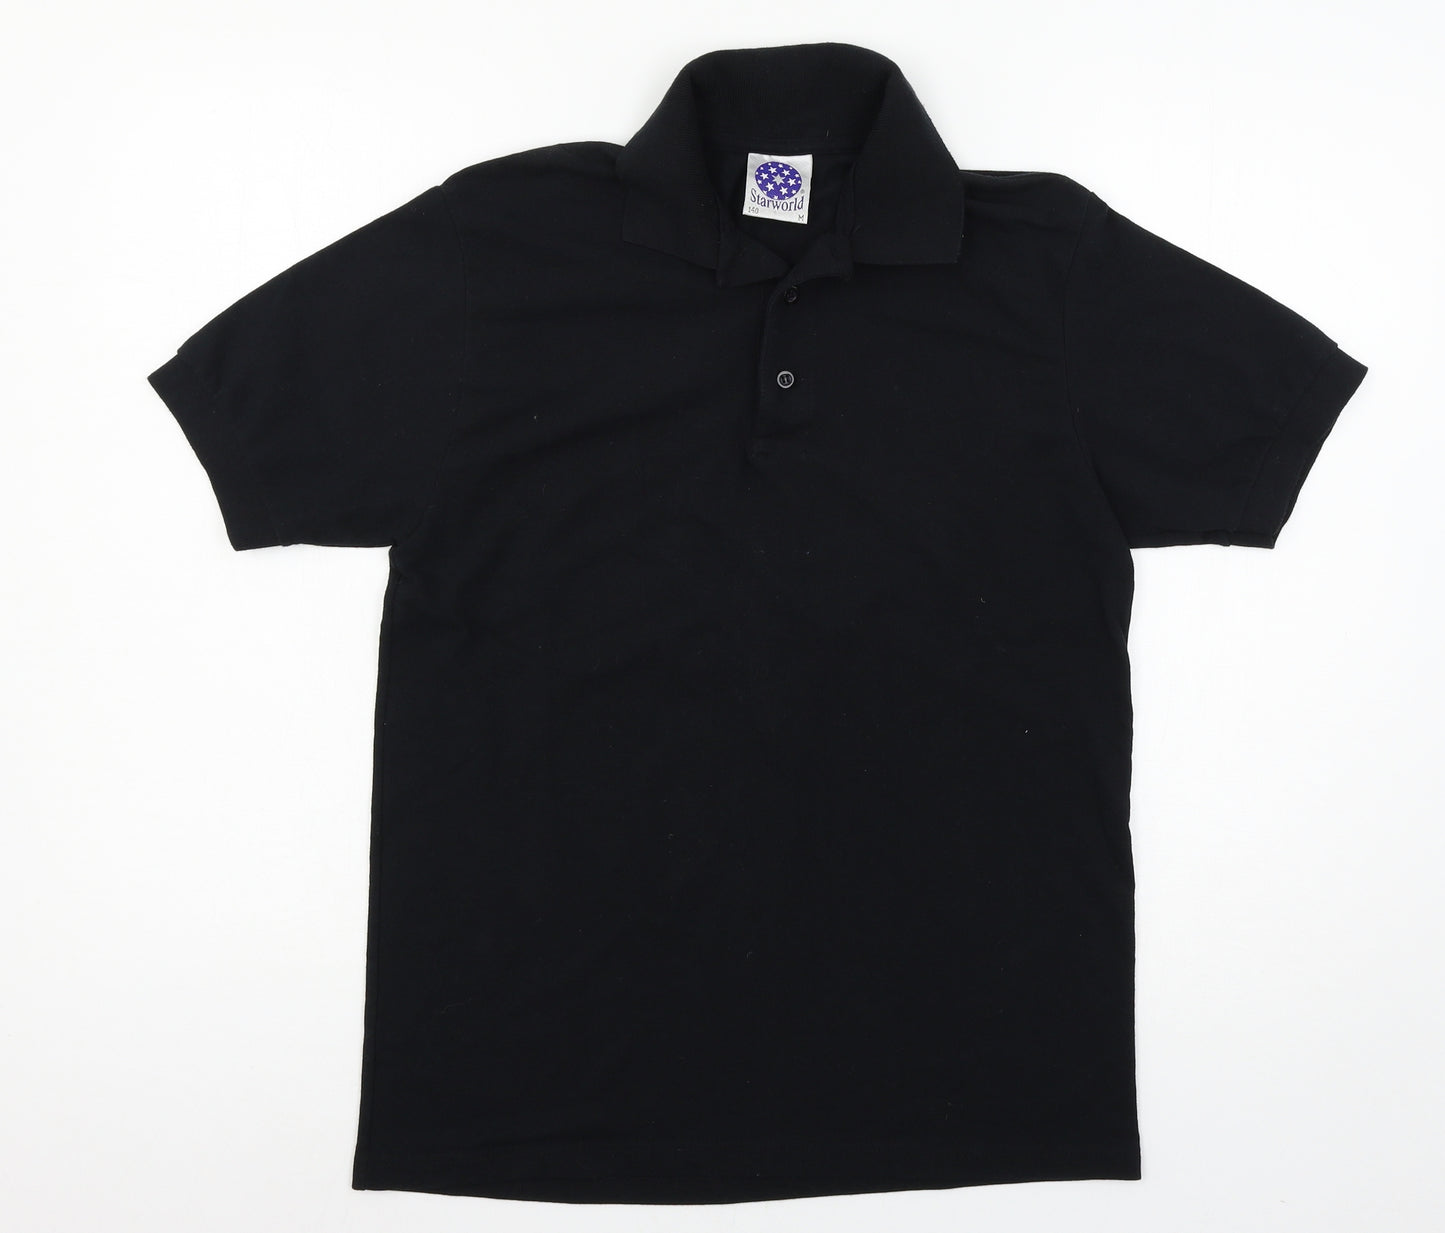 Starworld Boys Black  Jersey Basic T-Shirt Size M